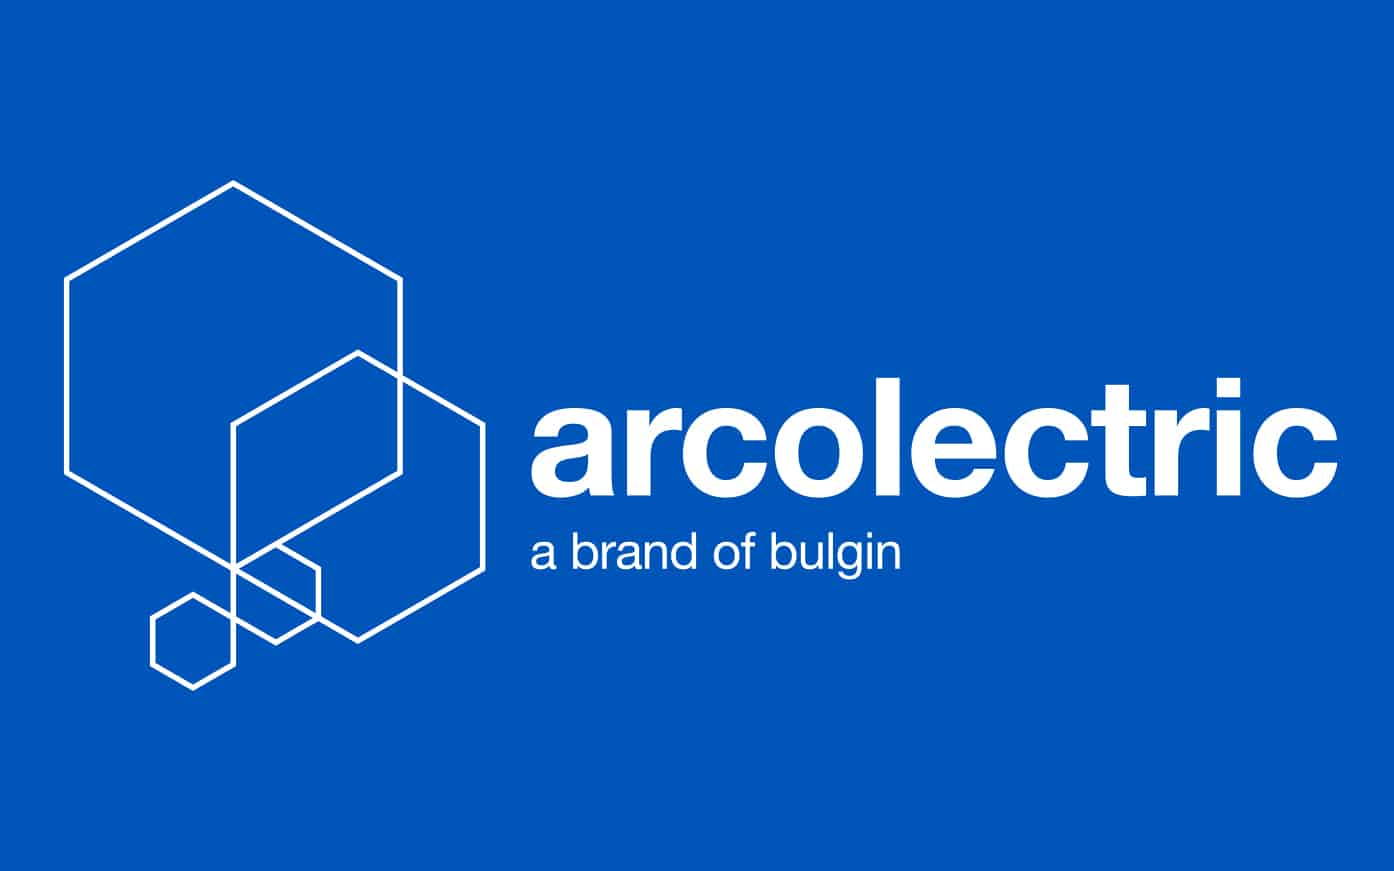 Arcolectric (Bulgin Ltd.)